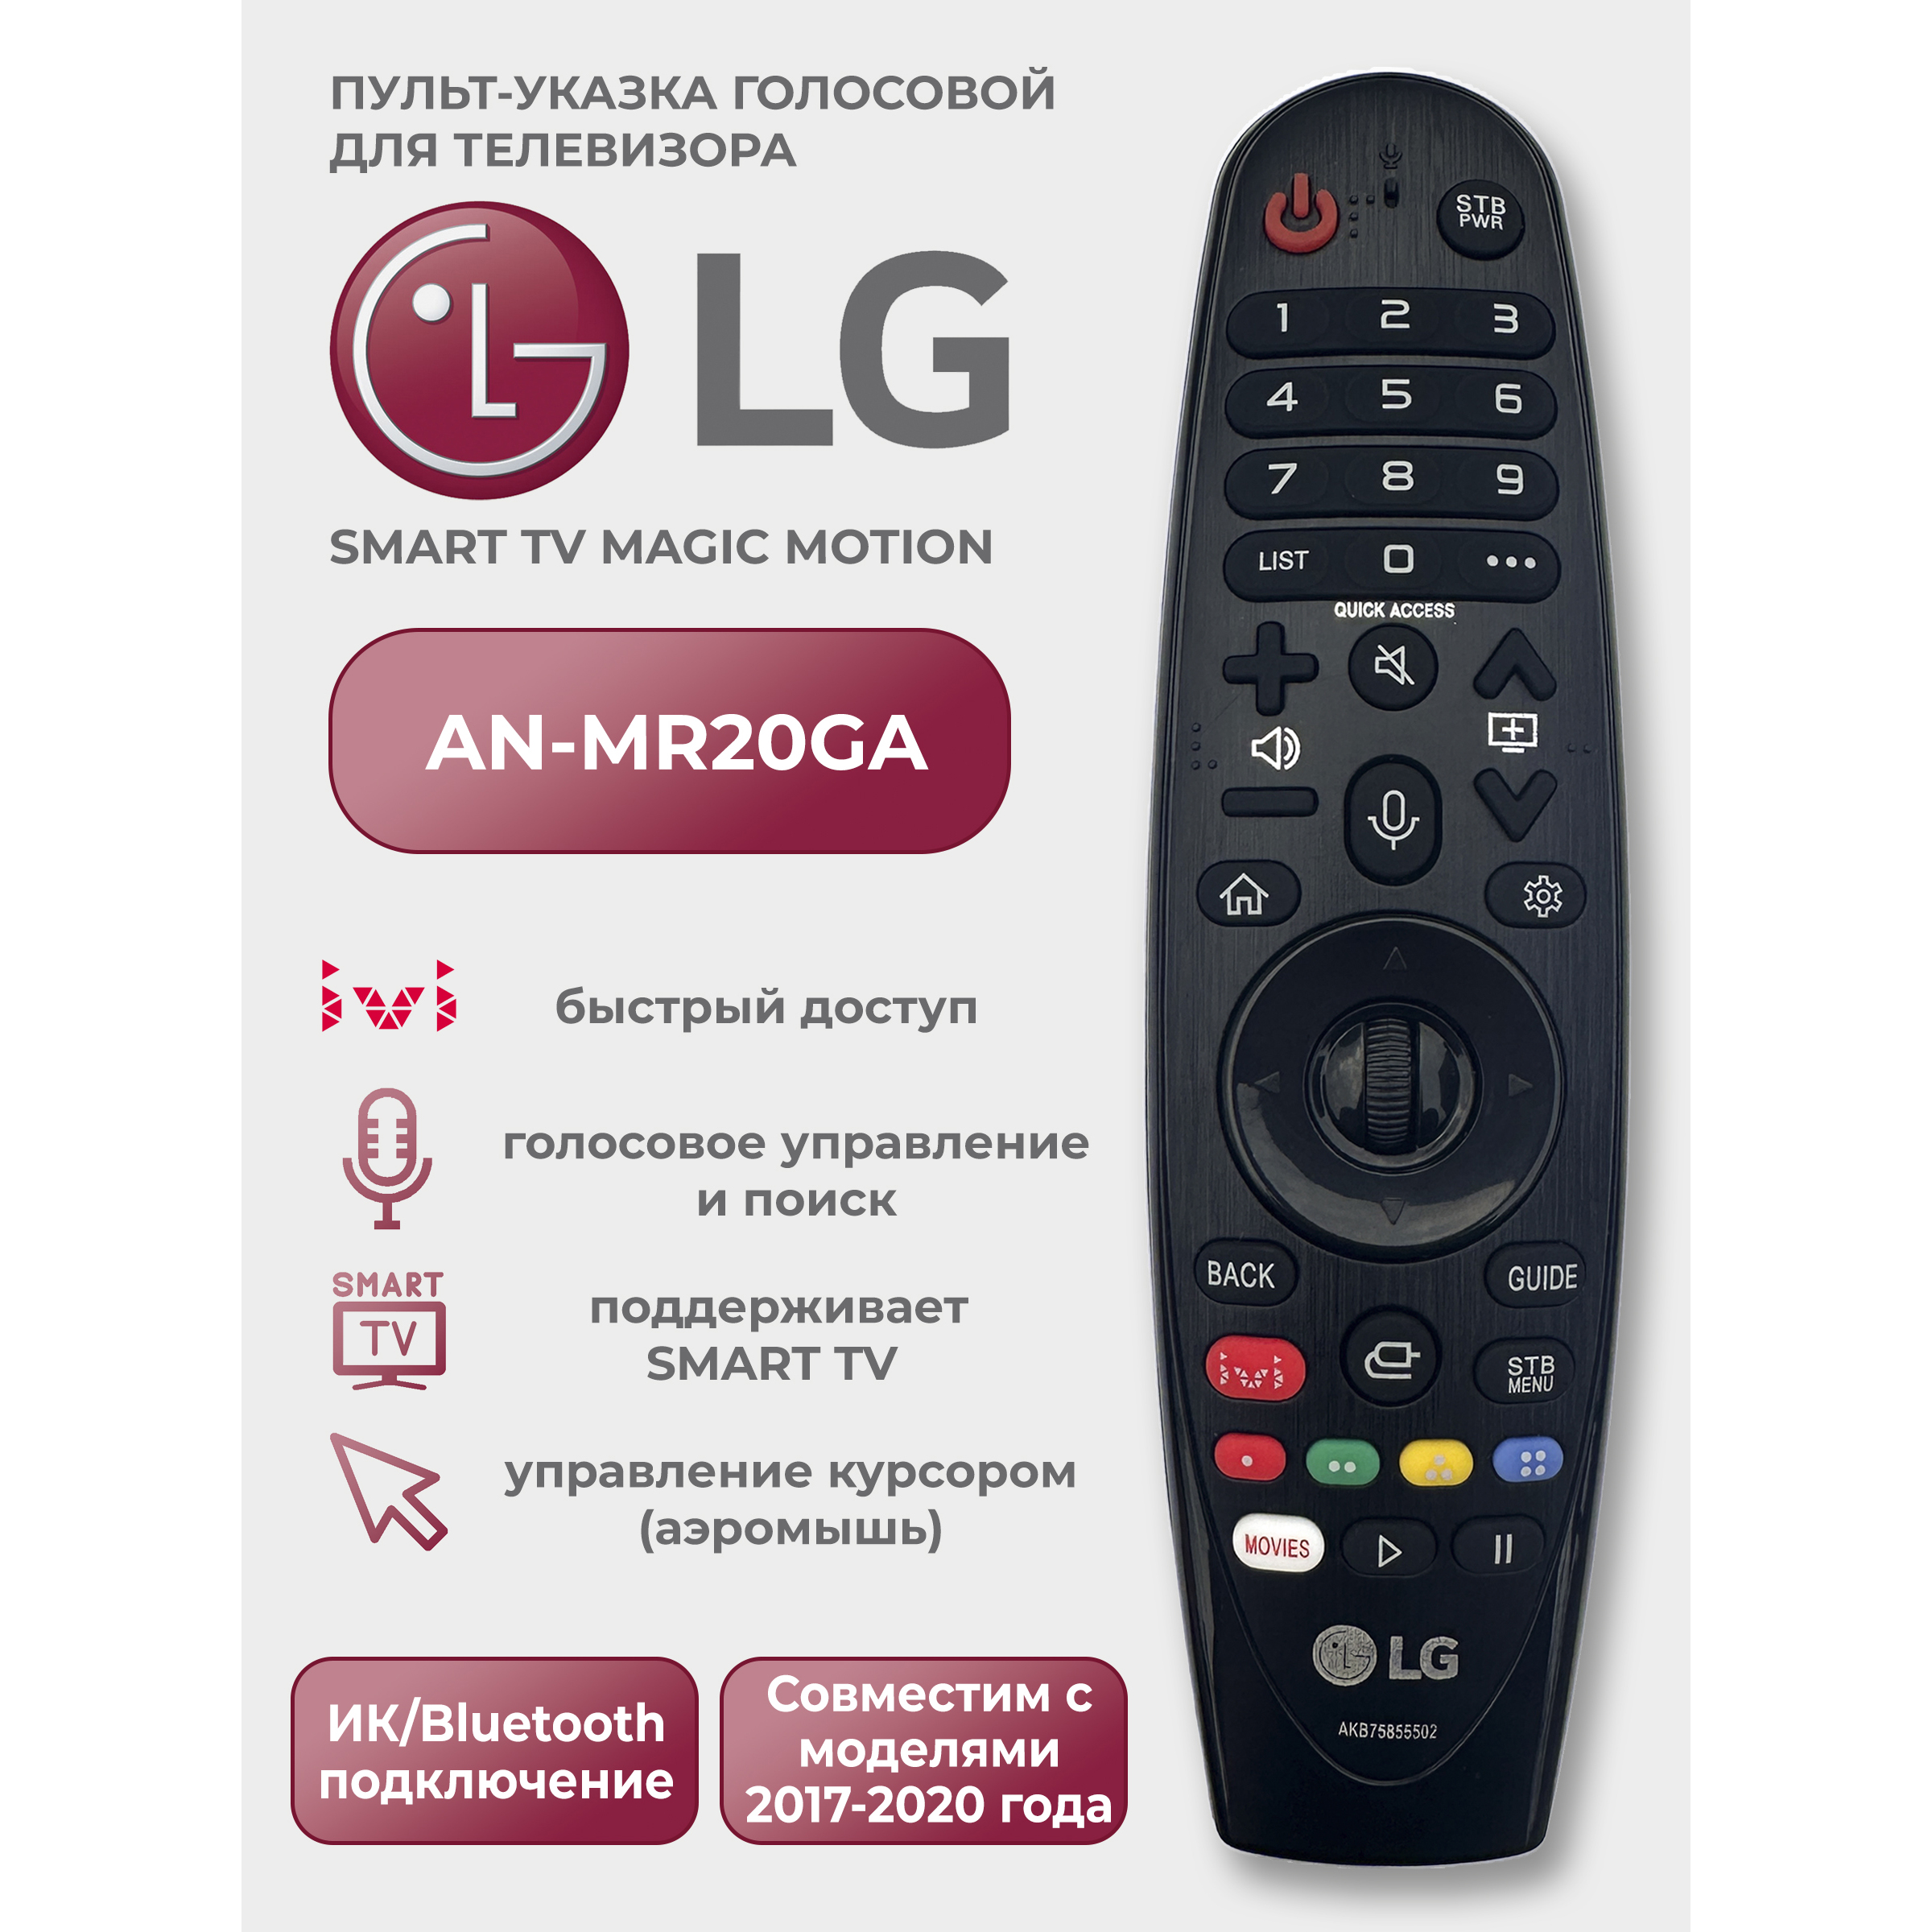 Пульт ду LG Smart TV Magic Motion AN-MR20BA